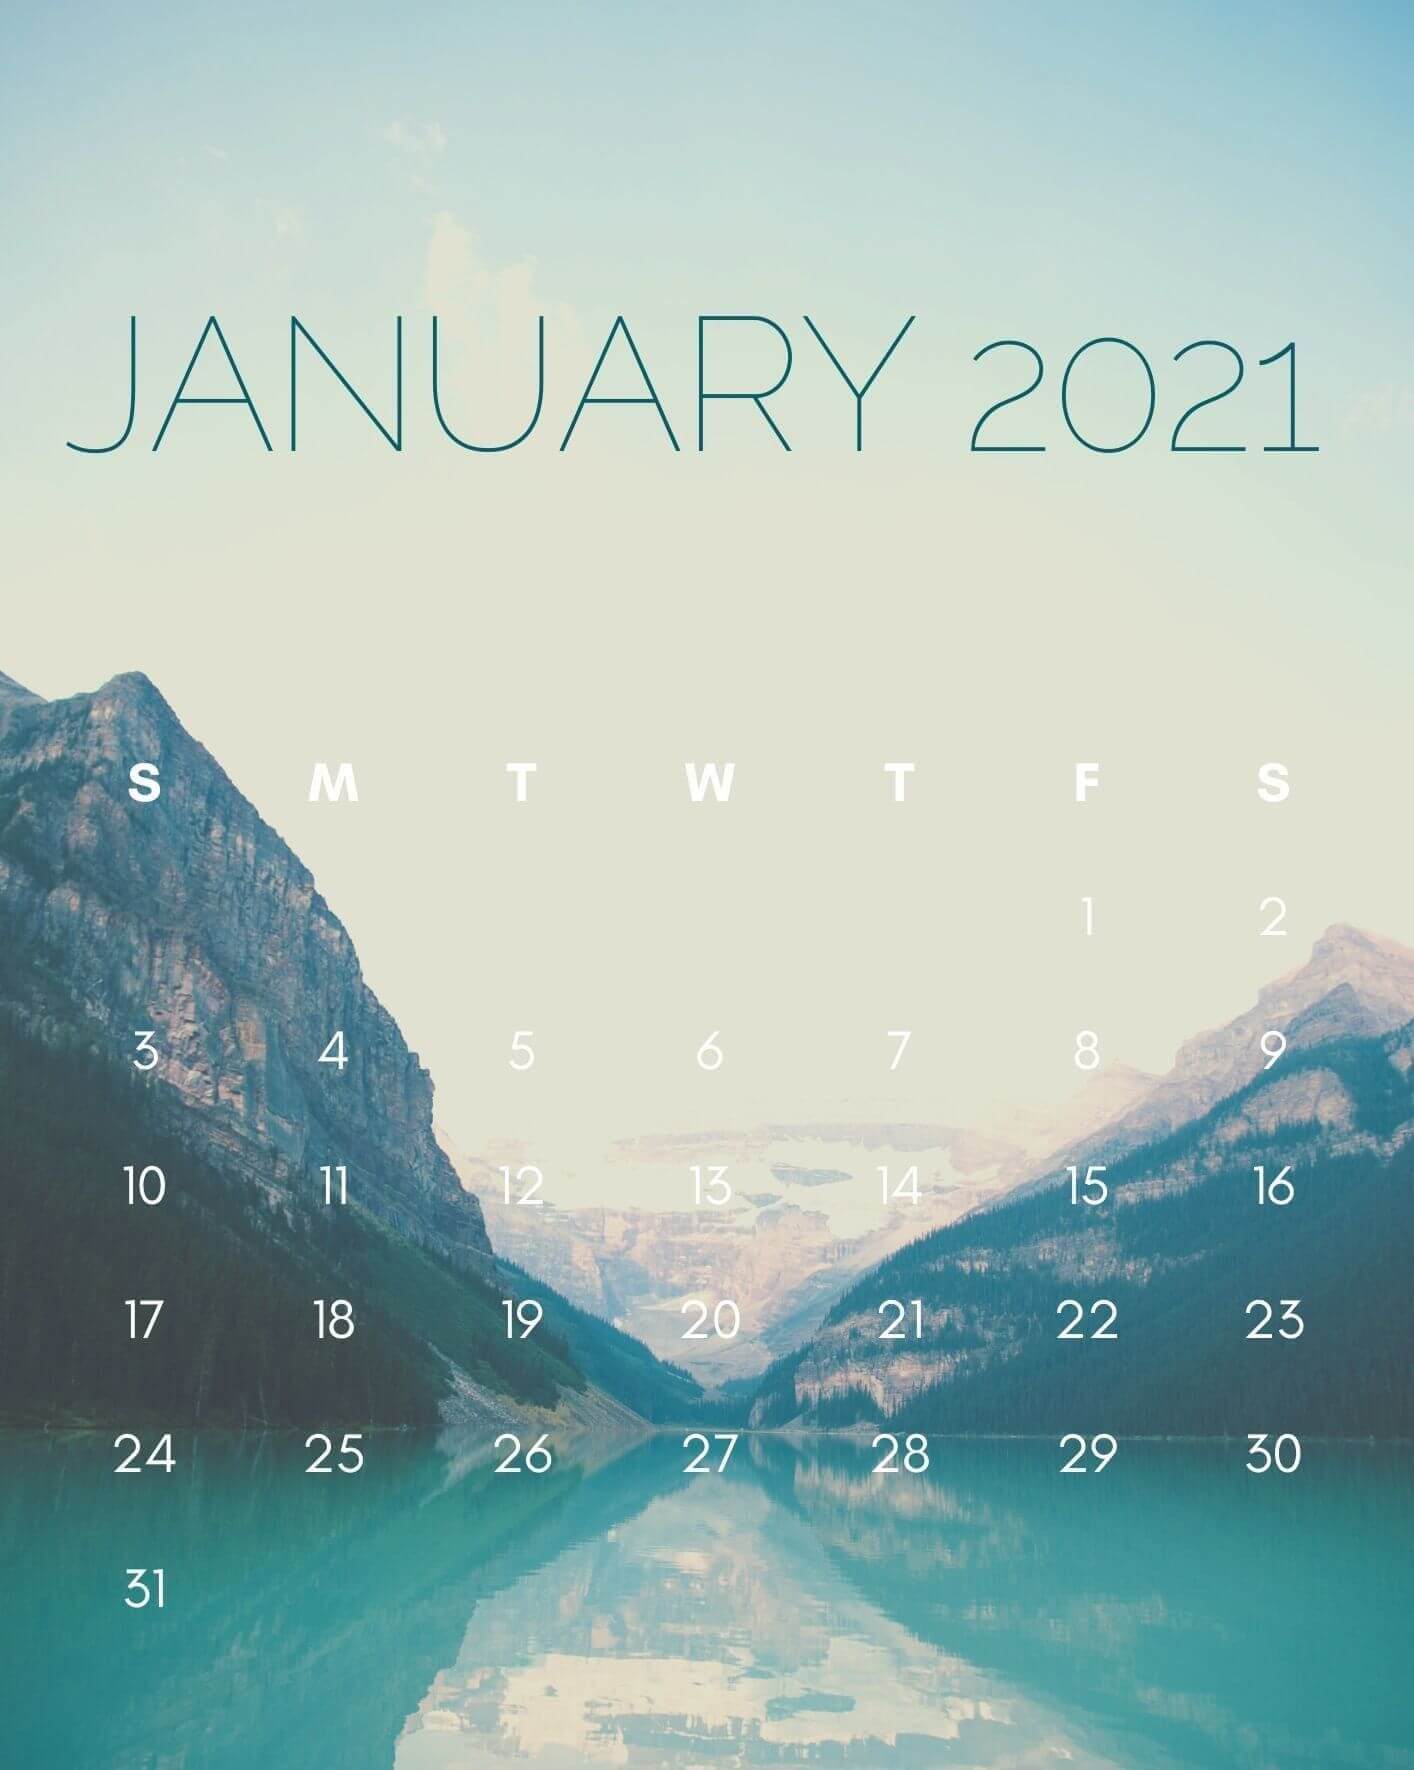 January 2021 iPhone Calendar